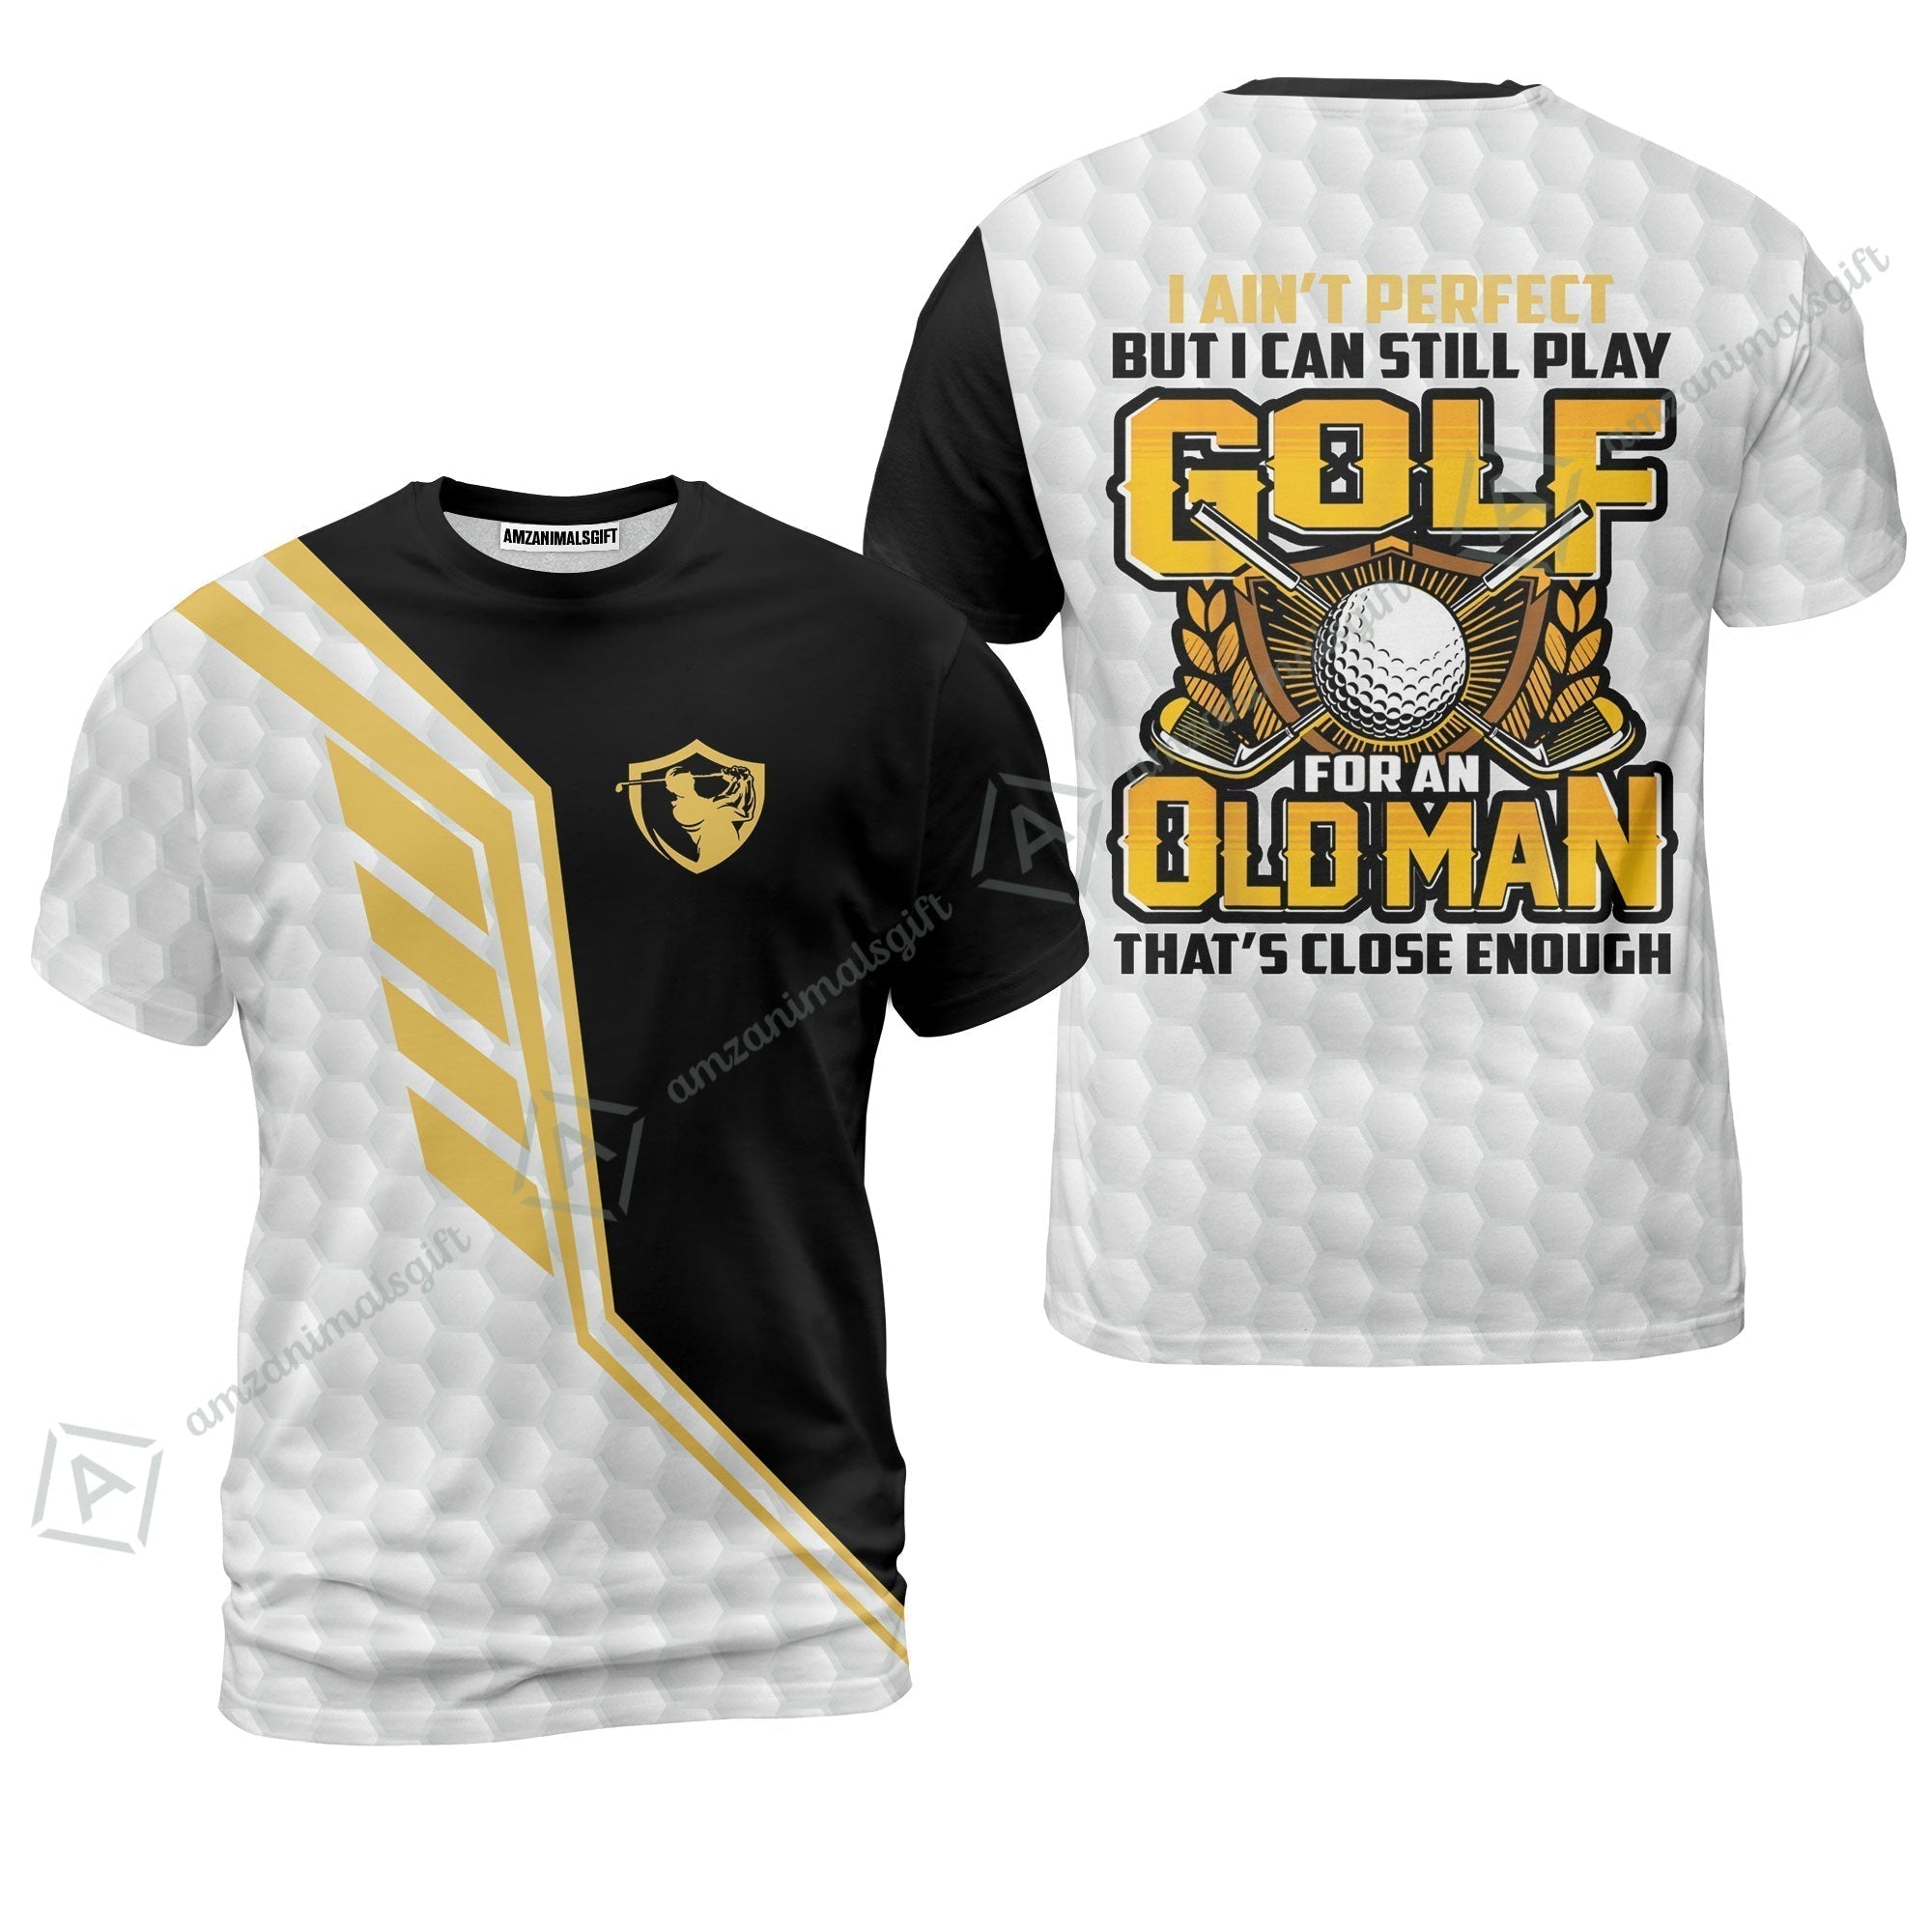 Golf T-Shirt - I Ain't Perfect But I Can Still Play Golf T-Shirt,  Black And White Golfing Shirt